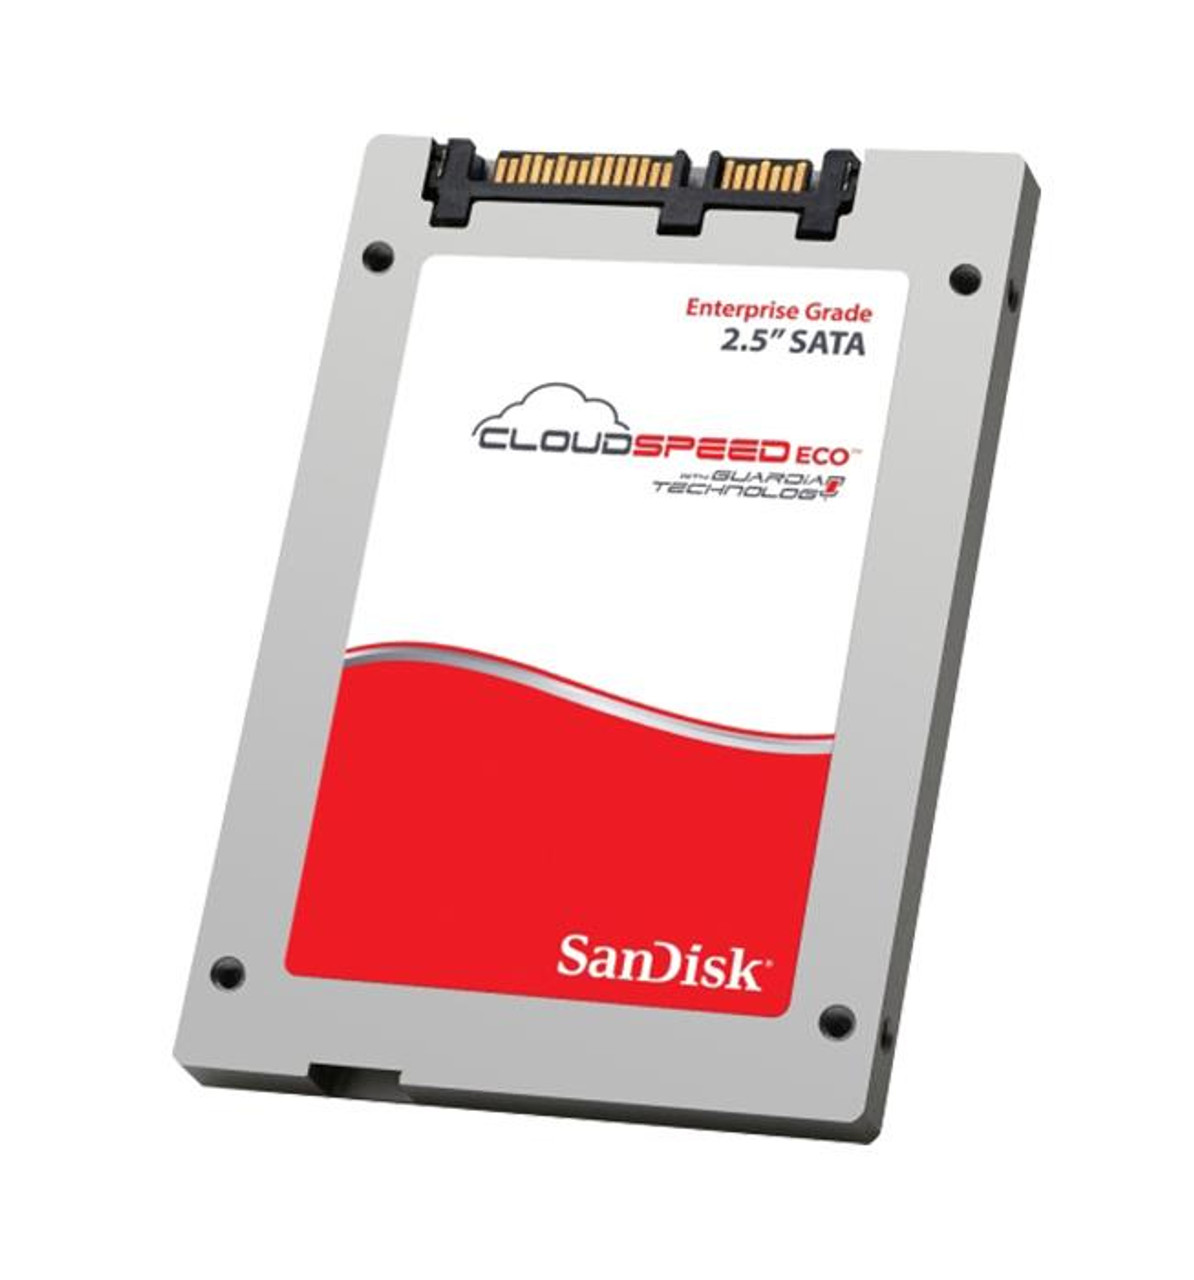 SDLFNDAR-480G SanDisk CloudSpeed Eco 480GB MLC SATA 6Gbps 2.5-inch Internal Solid State Drive (SSD)